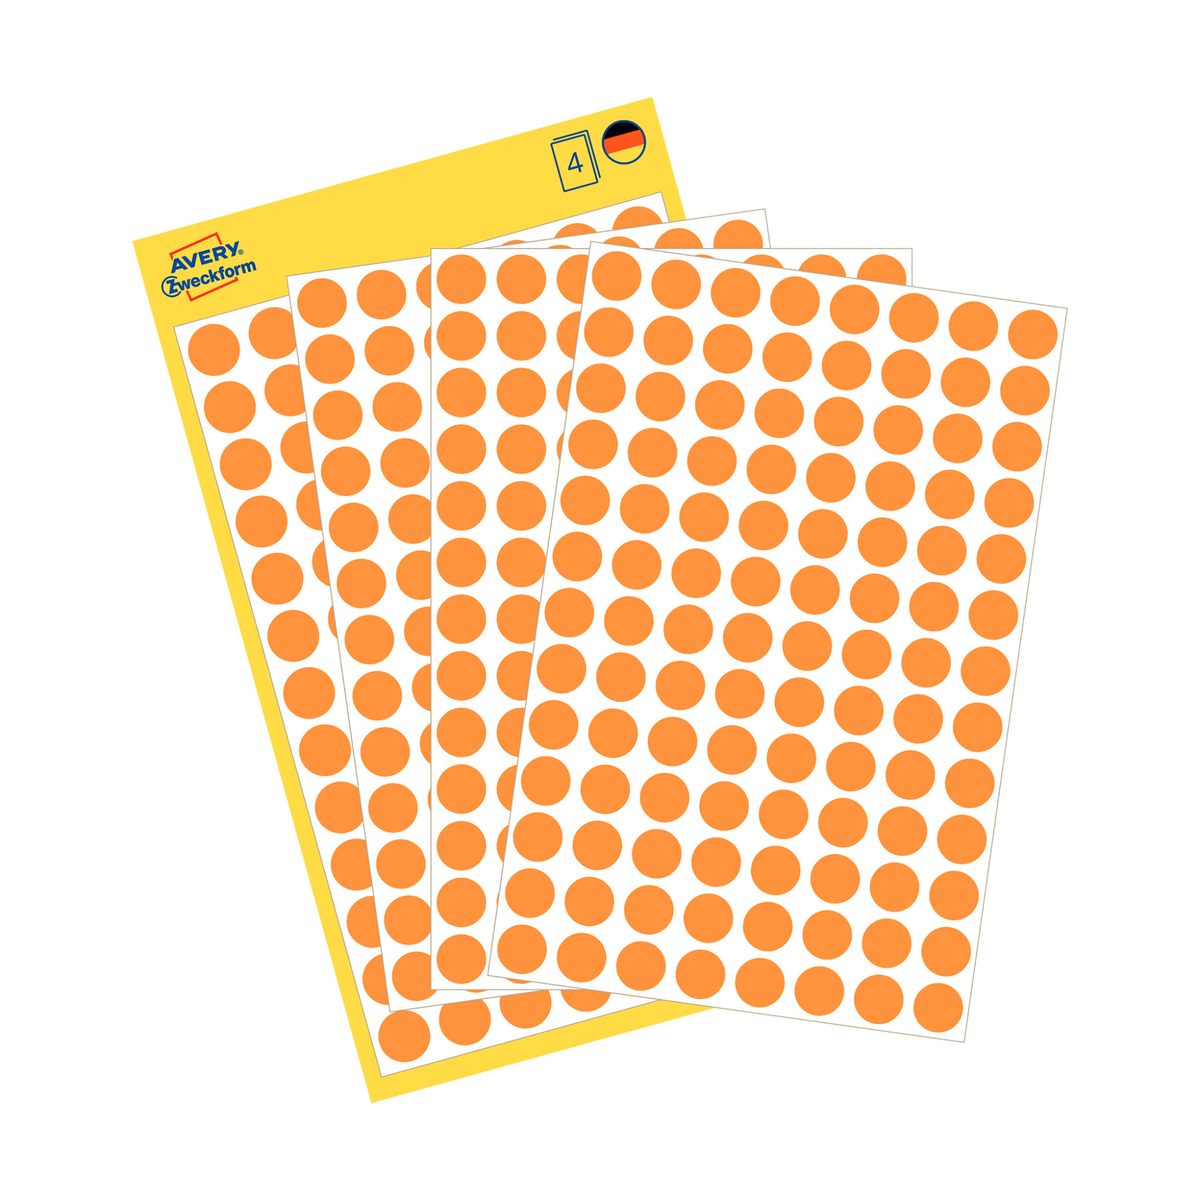 Avery Dot Stickers, 8mm, 416 Pcs, Orange, 3178